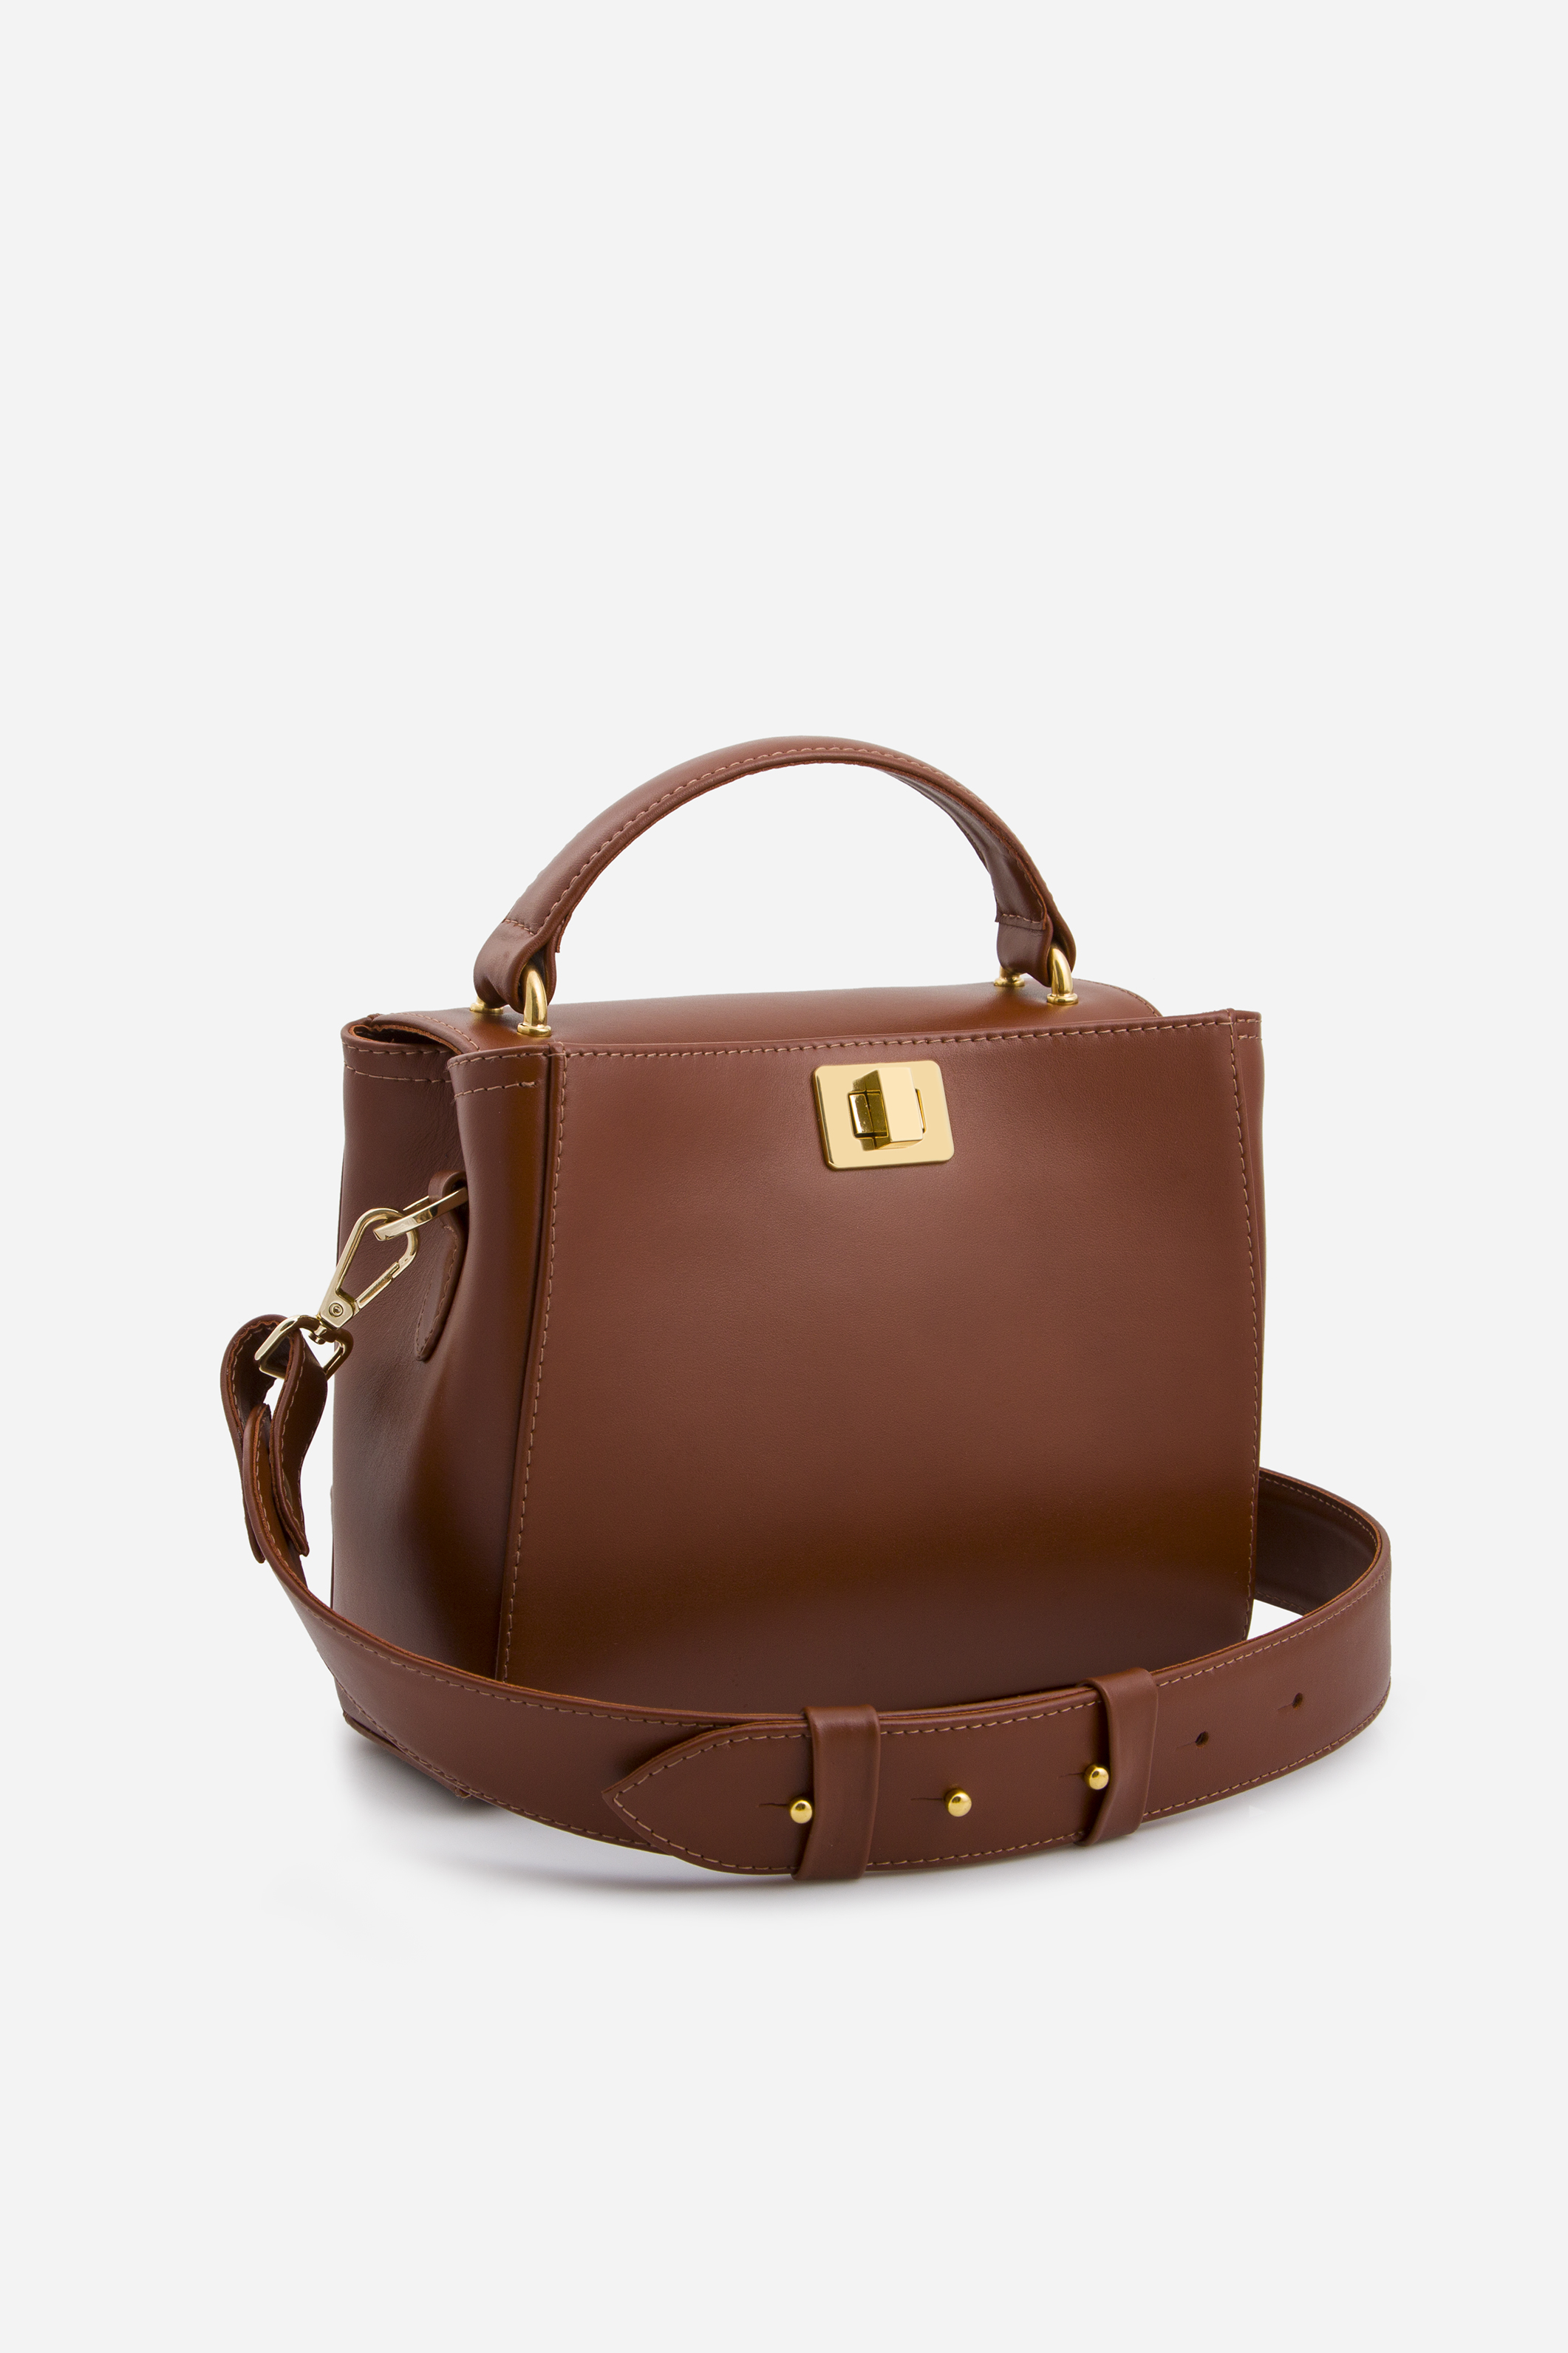 Erna mini
brown leather city bag /gold/